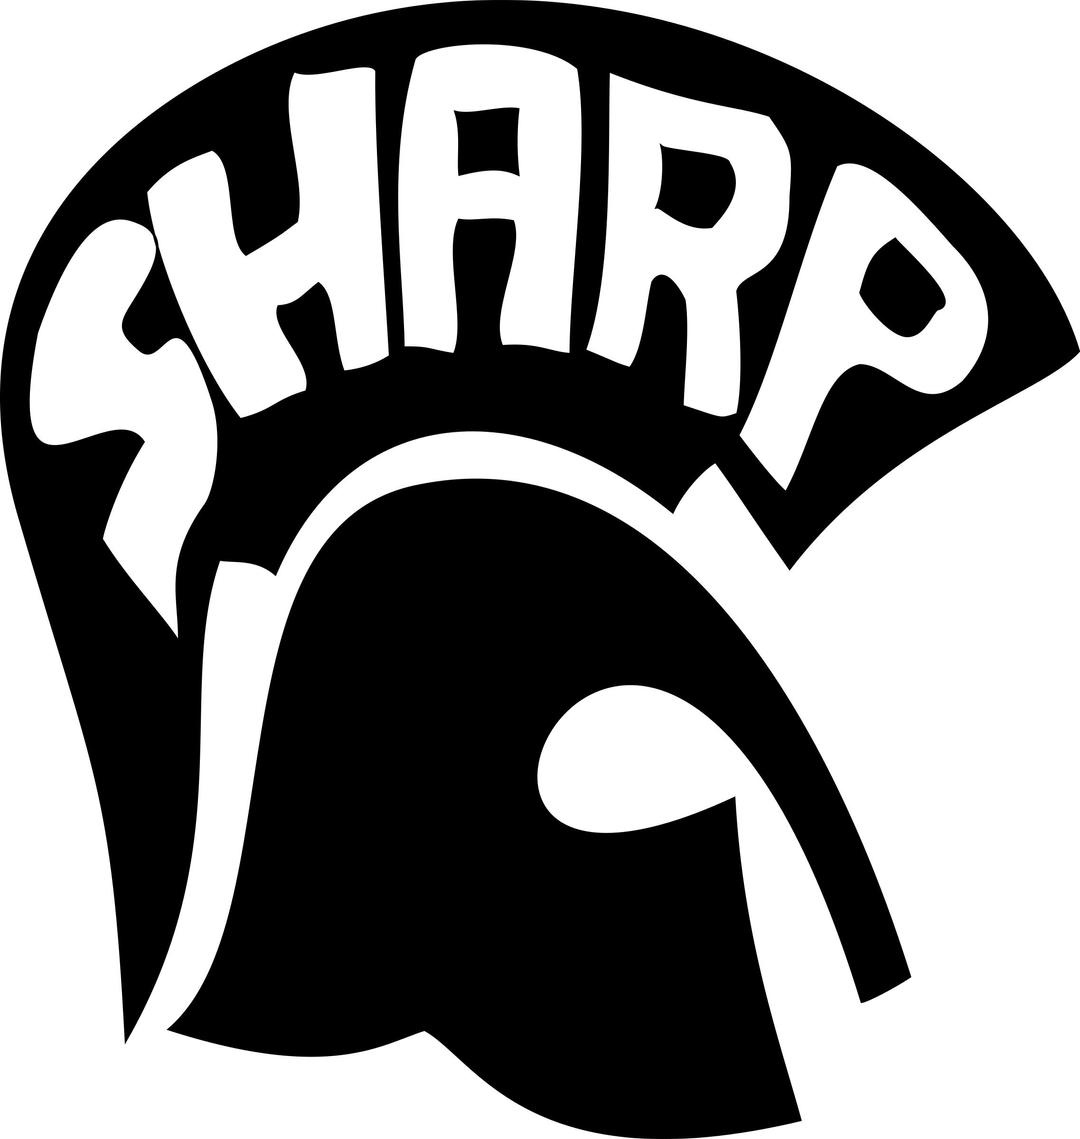 SHARP-logo png transparent